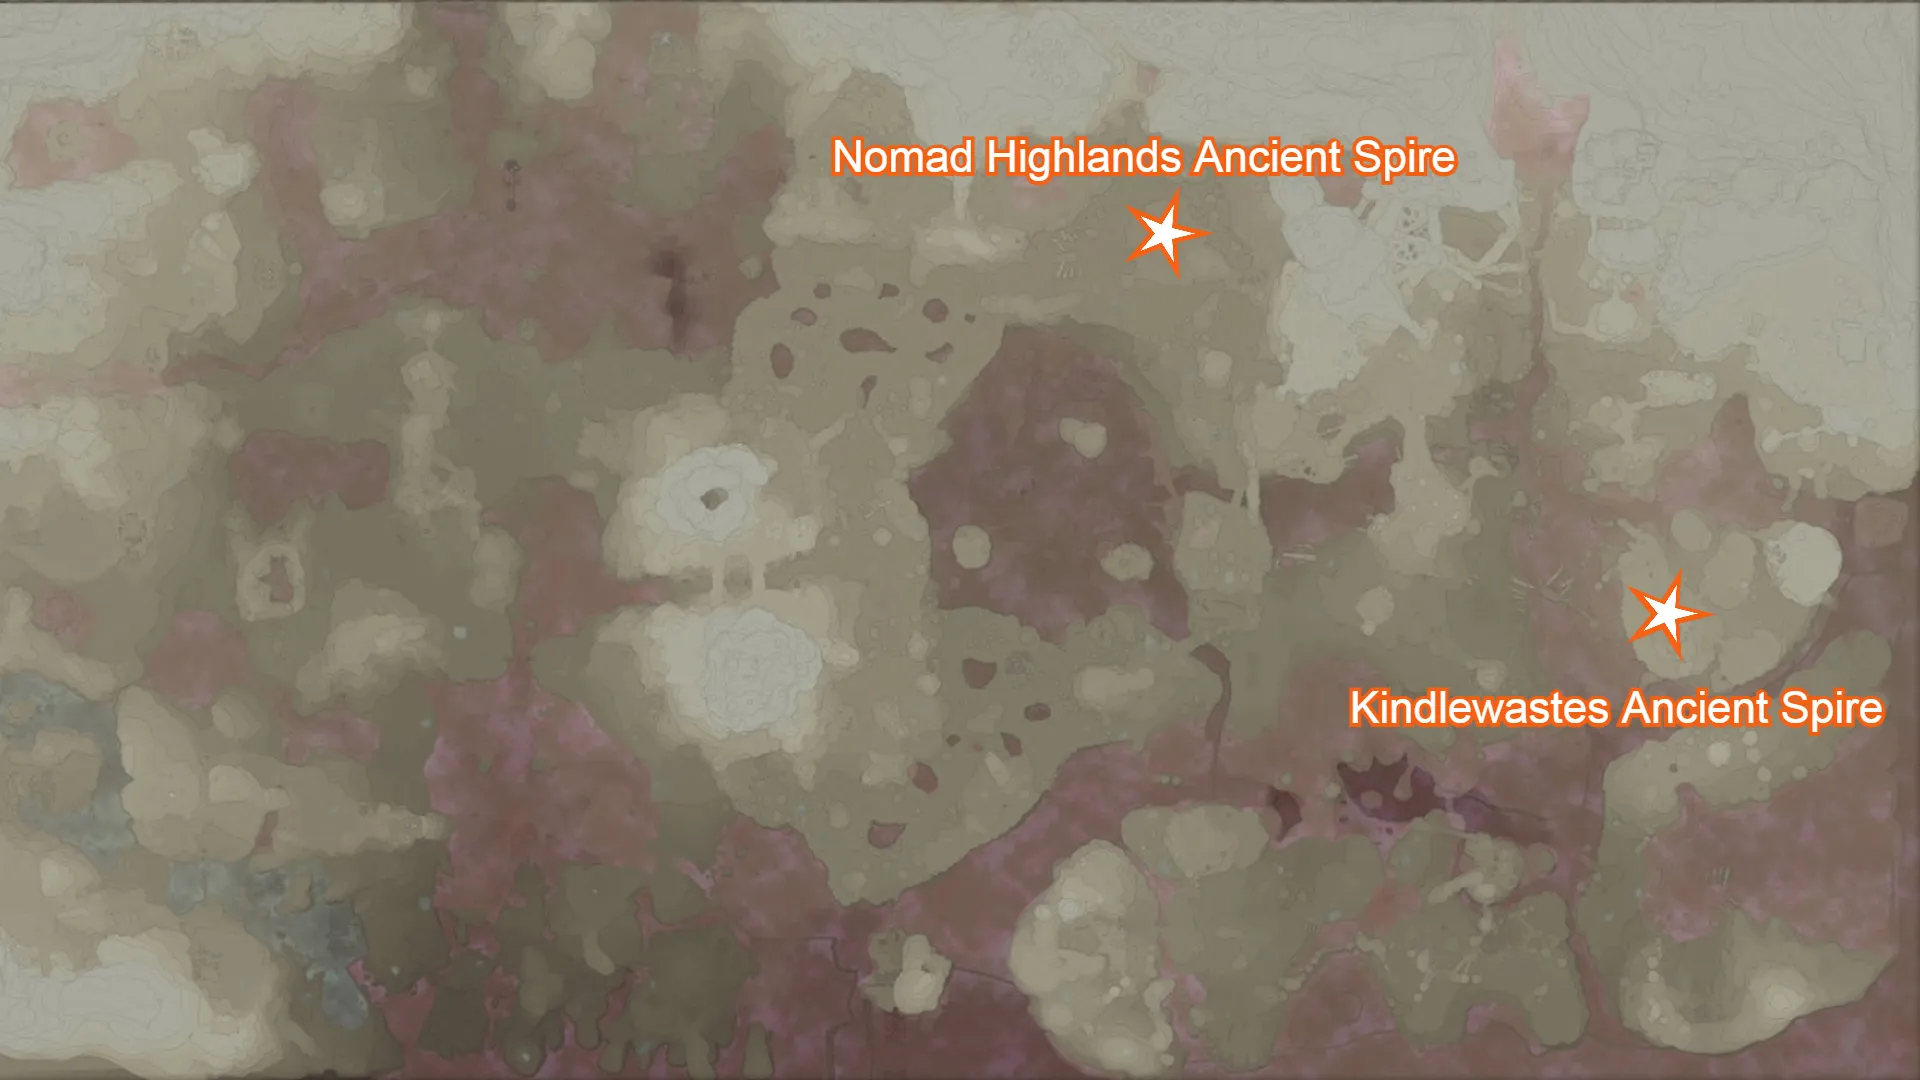 enshrouded map showing nomad highland spire and kindlewaste spire